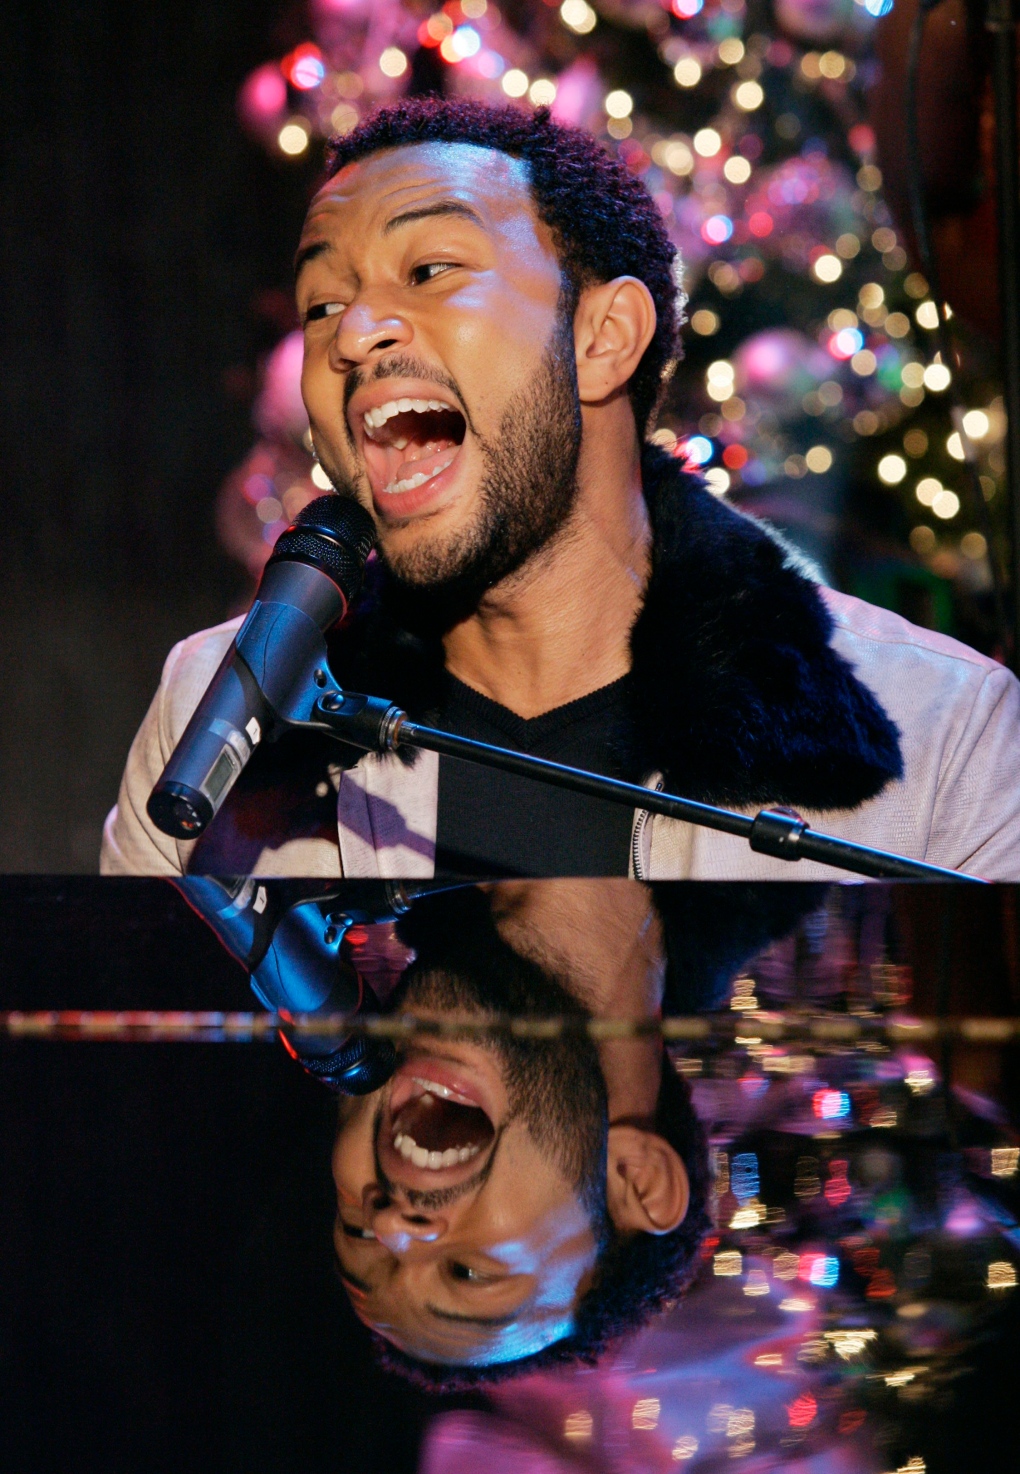 John Legend plays Christmas music